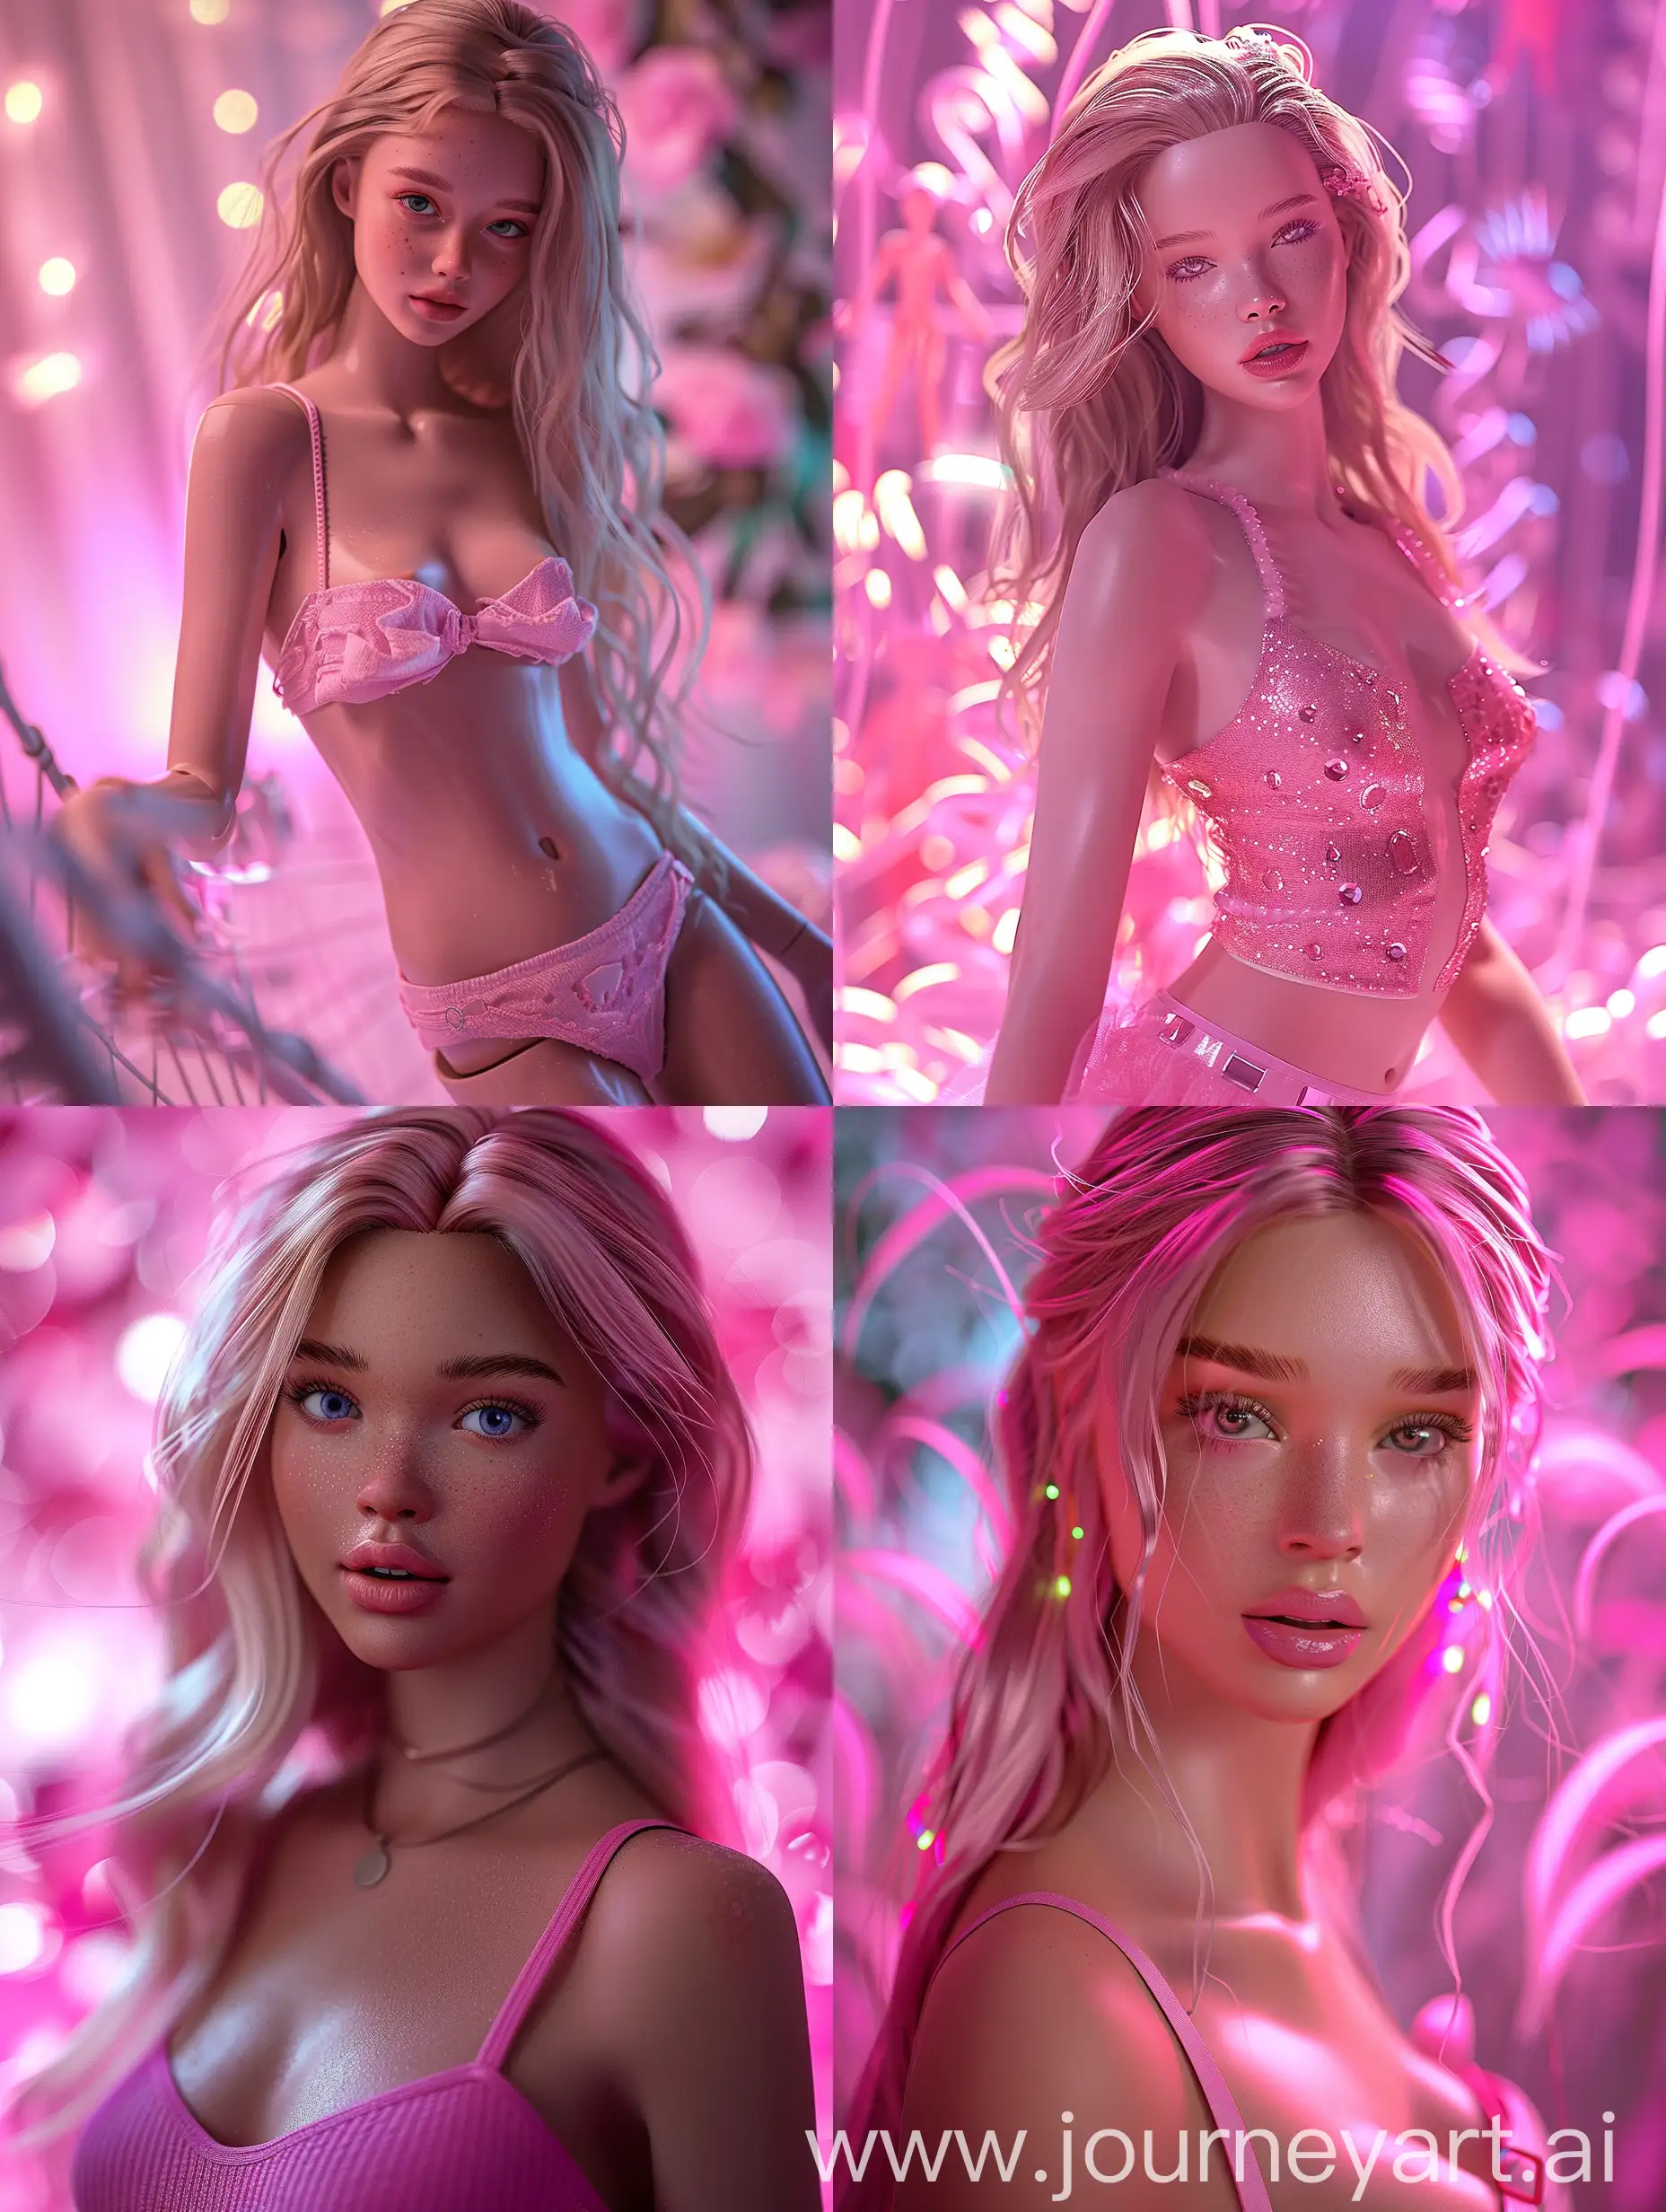 Sydney-Sweeney-Stunningly-Realistic-Barbie-Doll-Portrait-in-Soft-Pink-Lighting